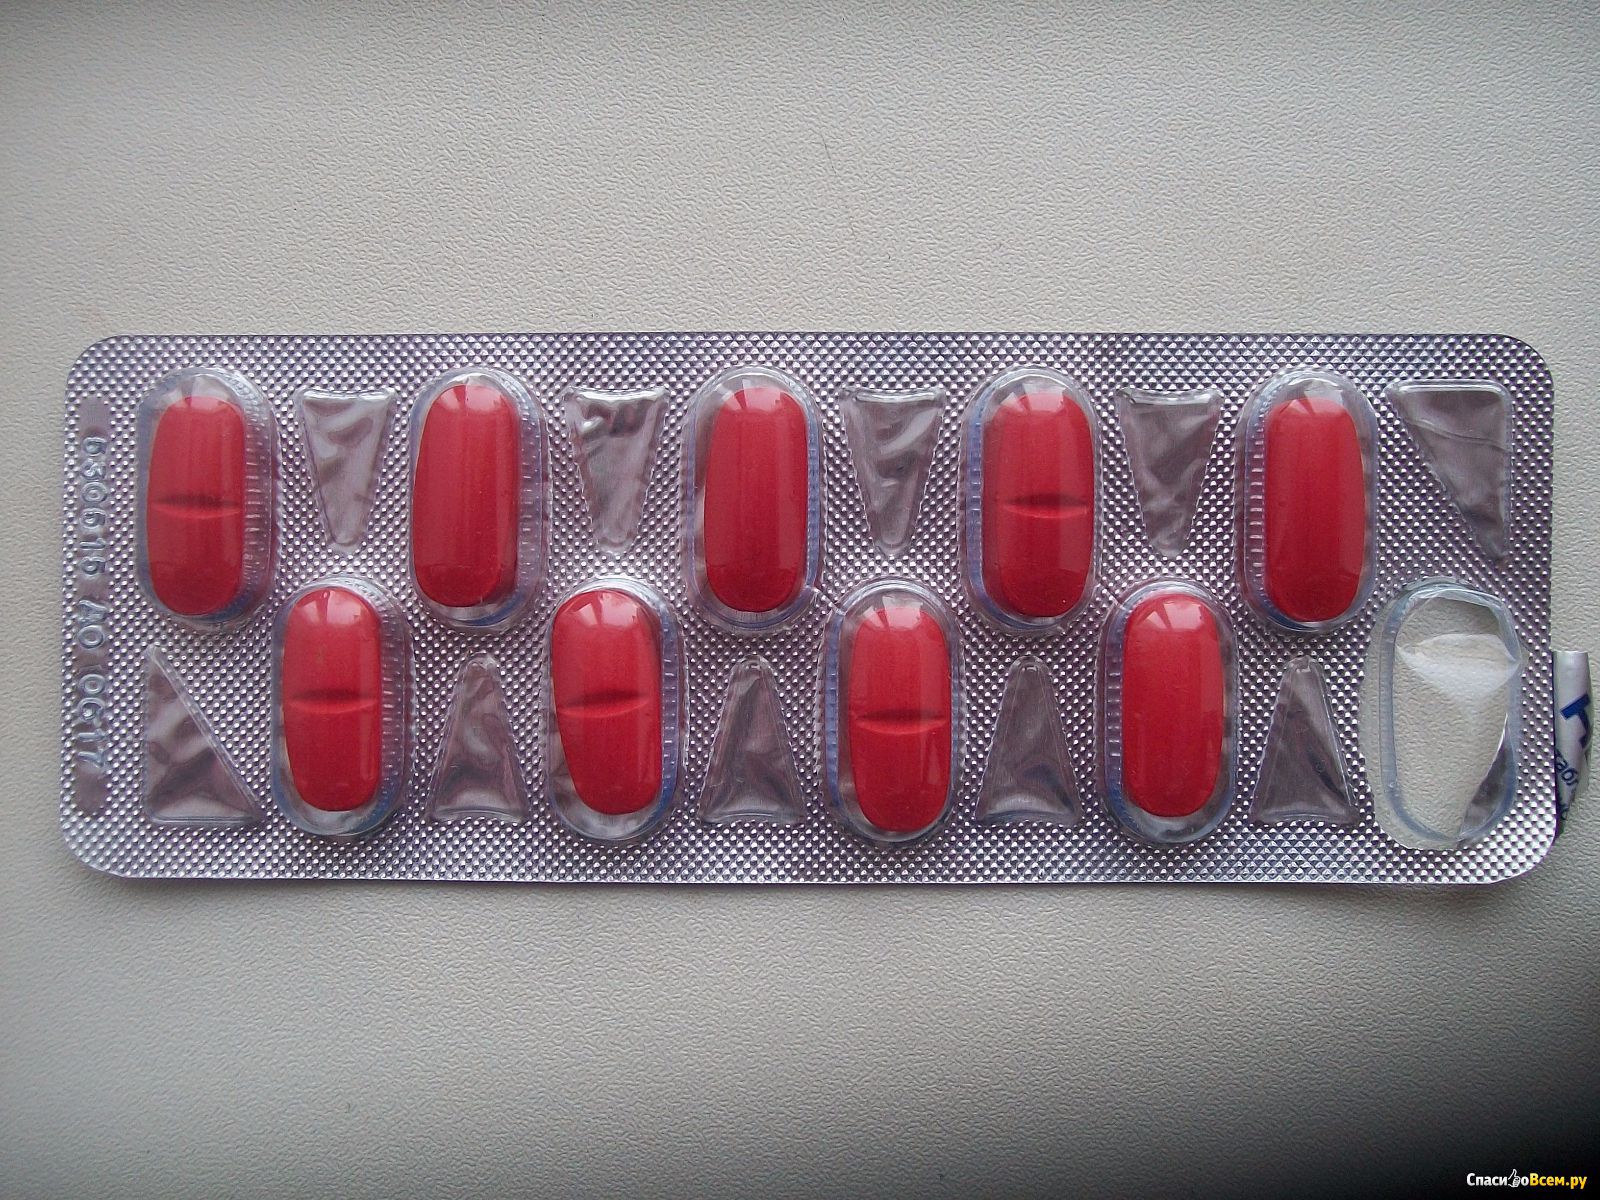 Некст состав таблетки. Капсулы Некст обезболивающее. Некст таблетки красные. Некст красные капсулы. Обезболивающие таблетки красного цвета.